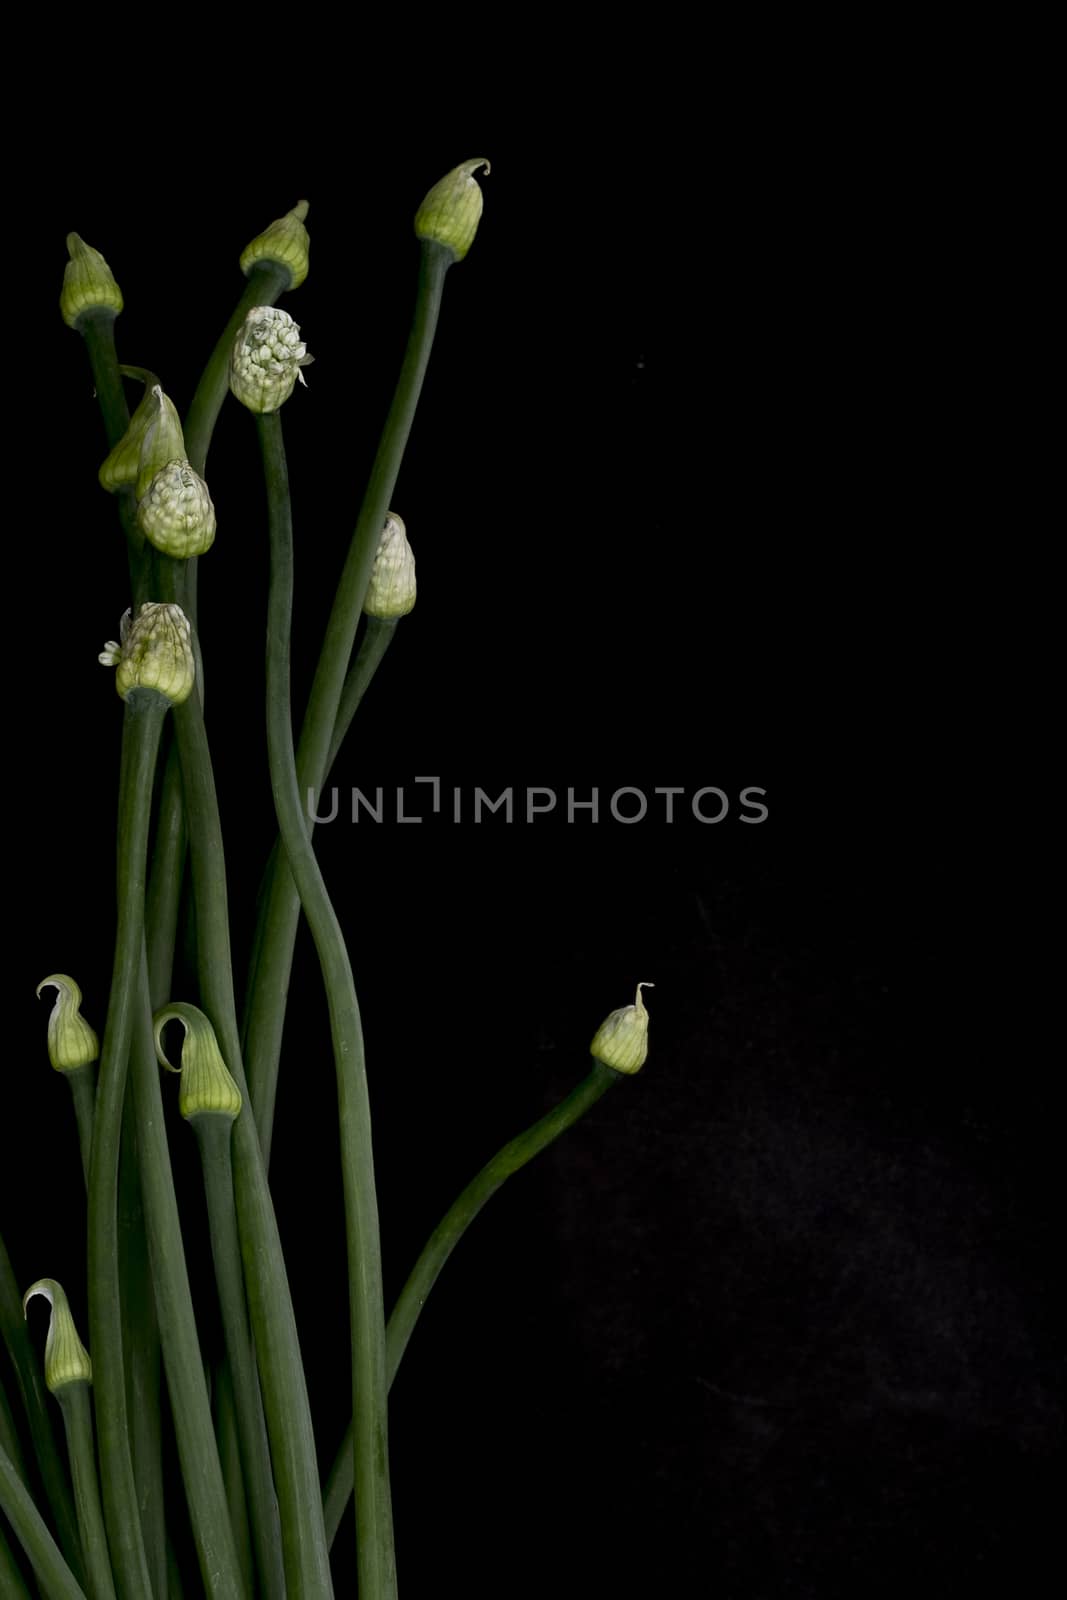 Chinese garlic flowers, on black background